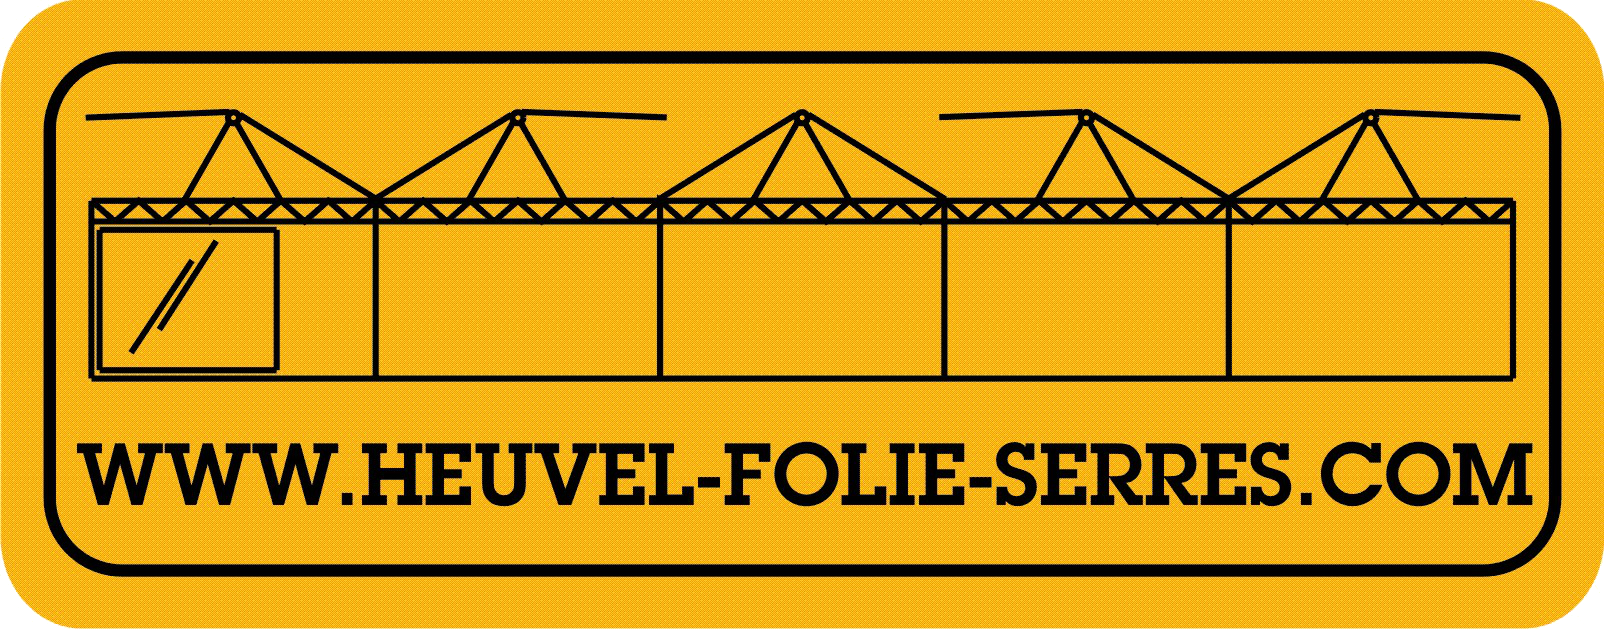 Heuvel-Folie-Serres